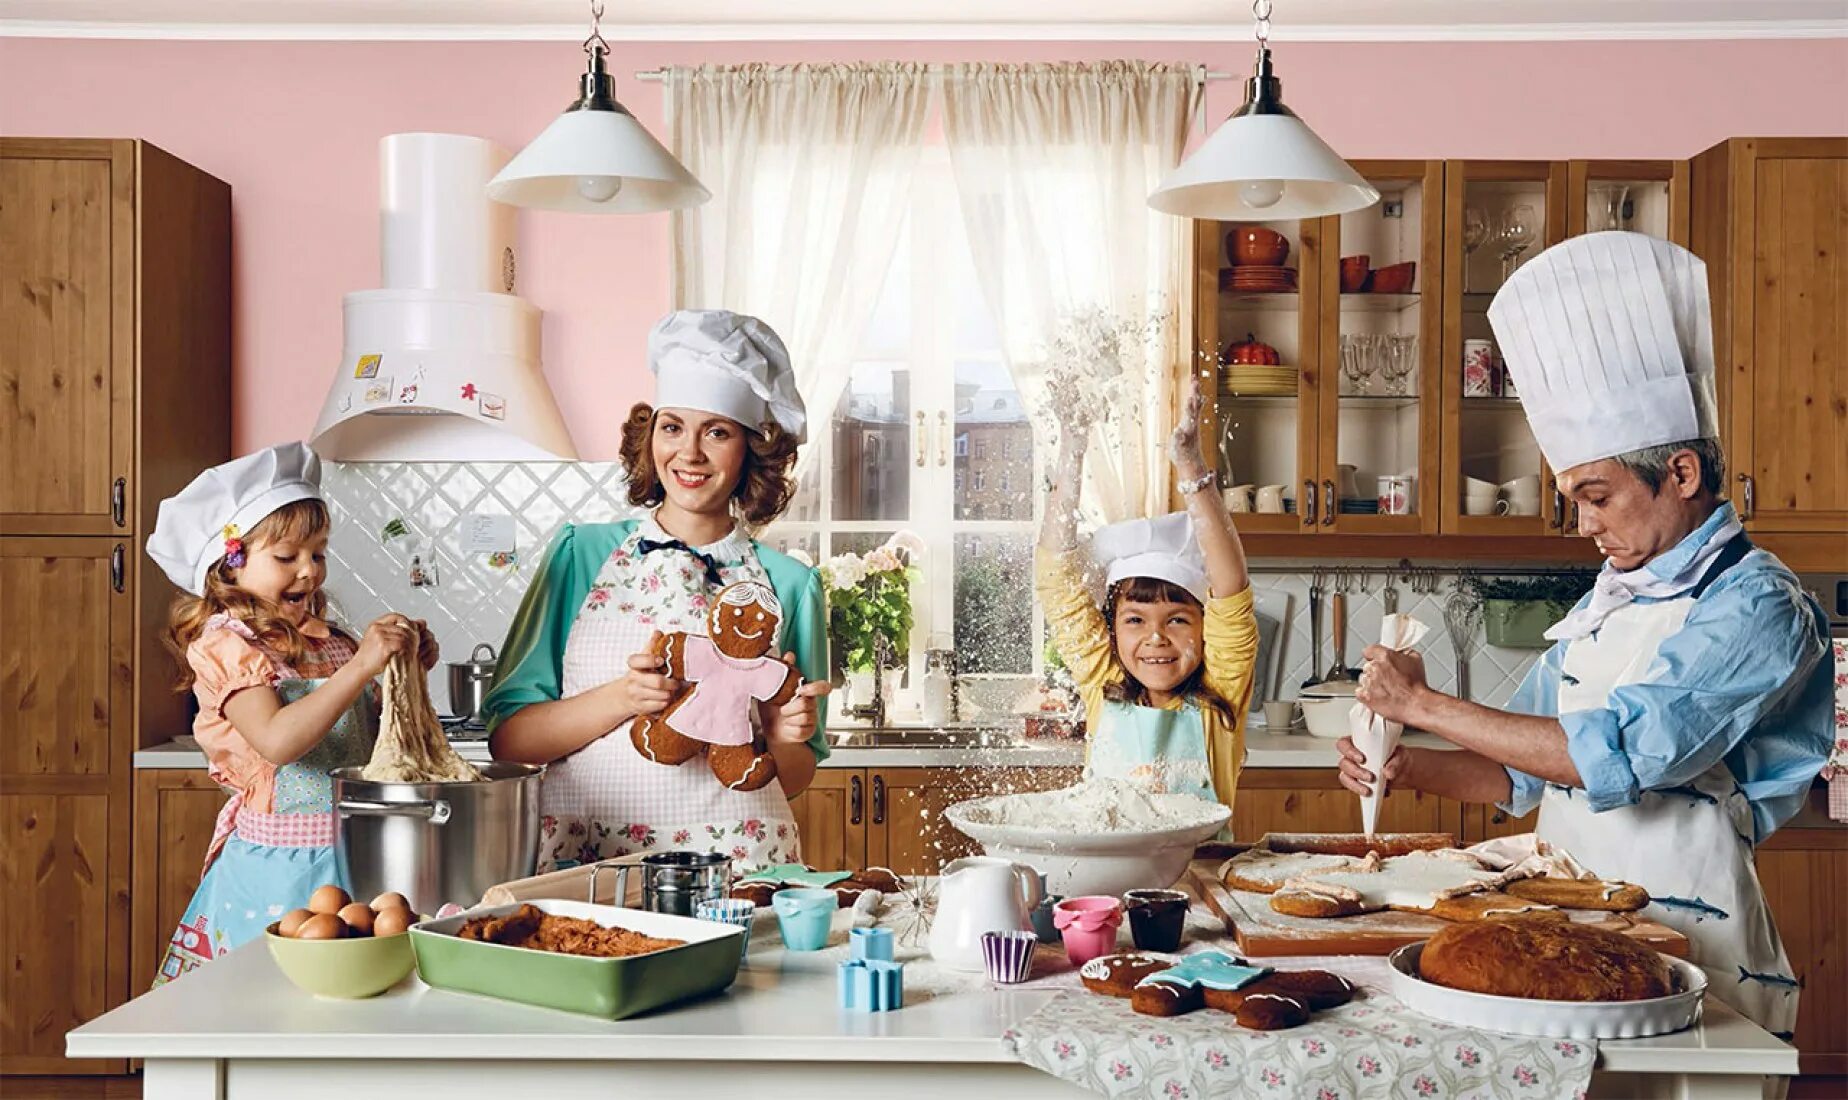 Семья на кухне. Фотосессия на кухне. Кухня для детей. Фотосъемка на кухне с детьми.